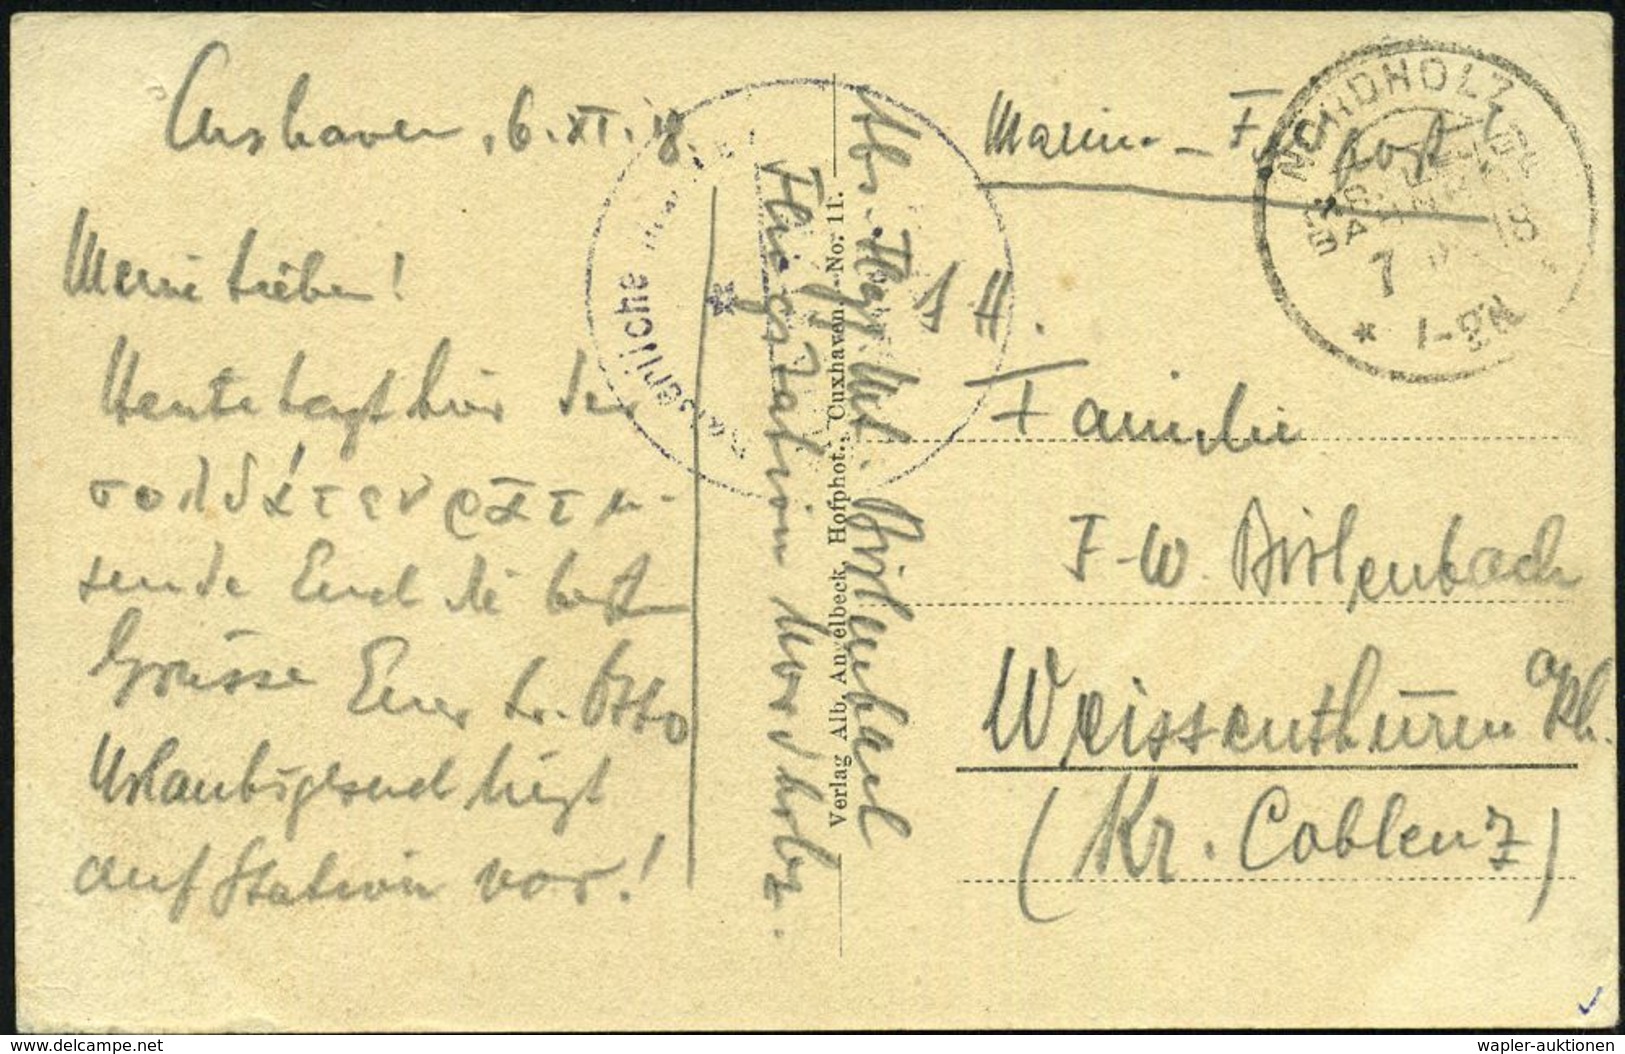 Cuxhaven 1918 (6.11.) Foto-Ak.: Leuchtturm , 1K-Segm.: NORDHOLZ/(KR. LEHE)/BAHNHOF, Sehr Späte Marine-Feldpost-Kt.! - LE - Vuurtorens